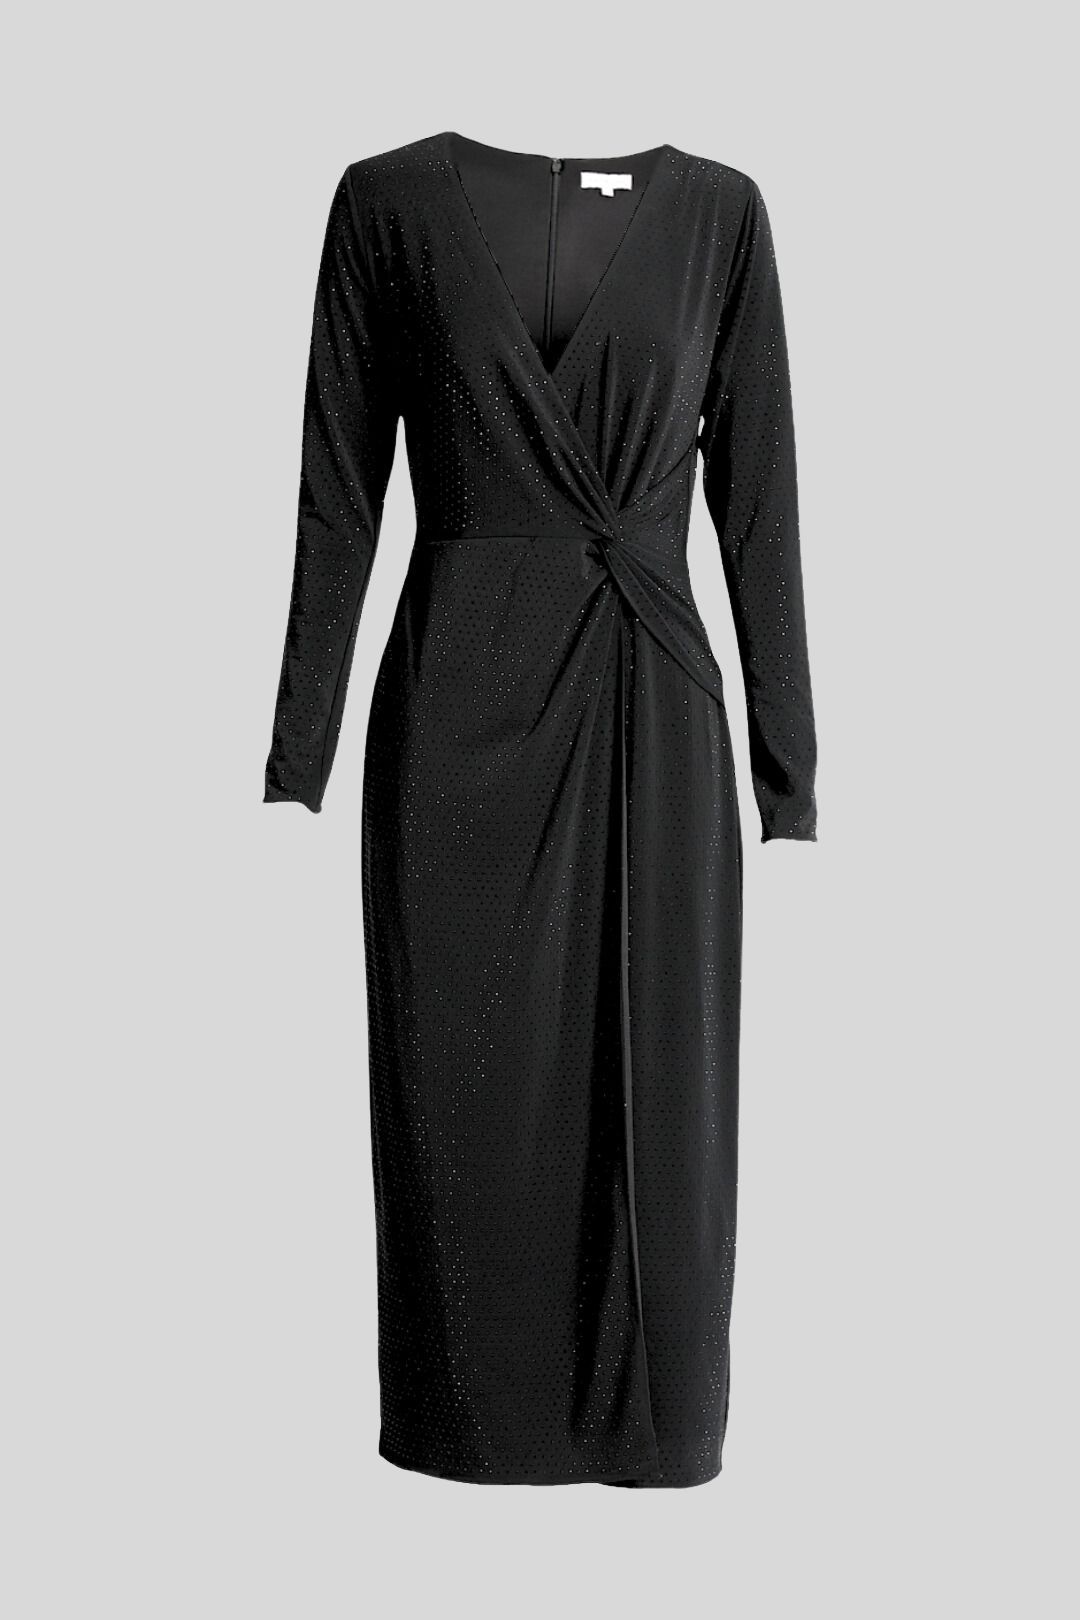 Halston Heritage Tenaya Crystal Jersey Midi Dress in Black